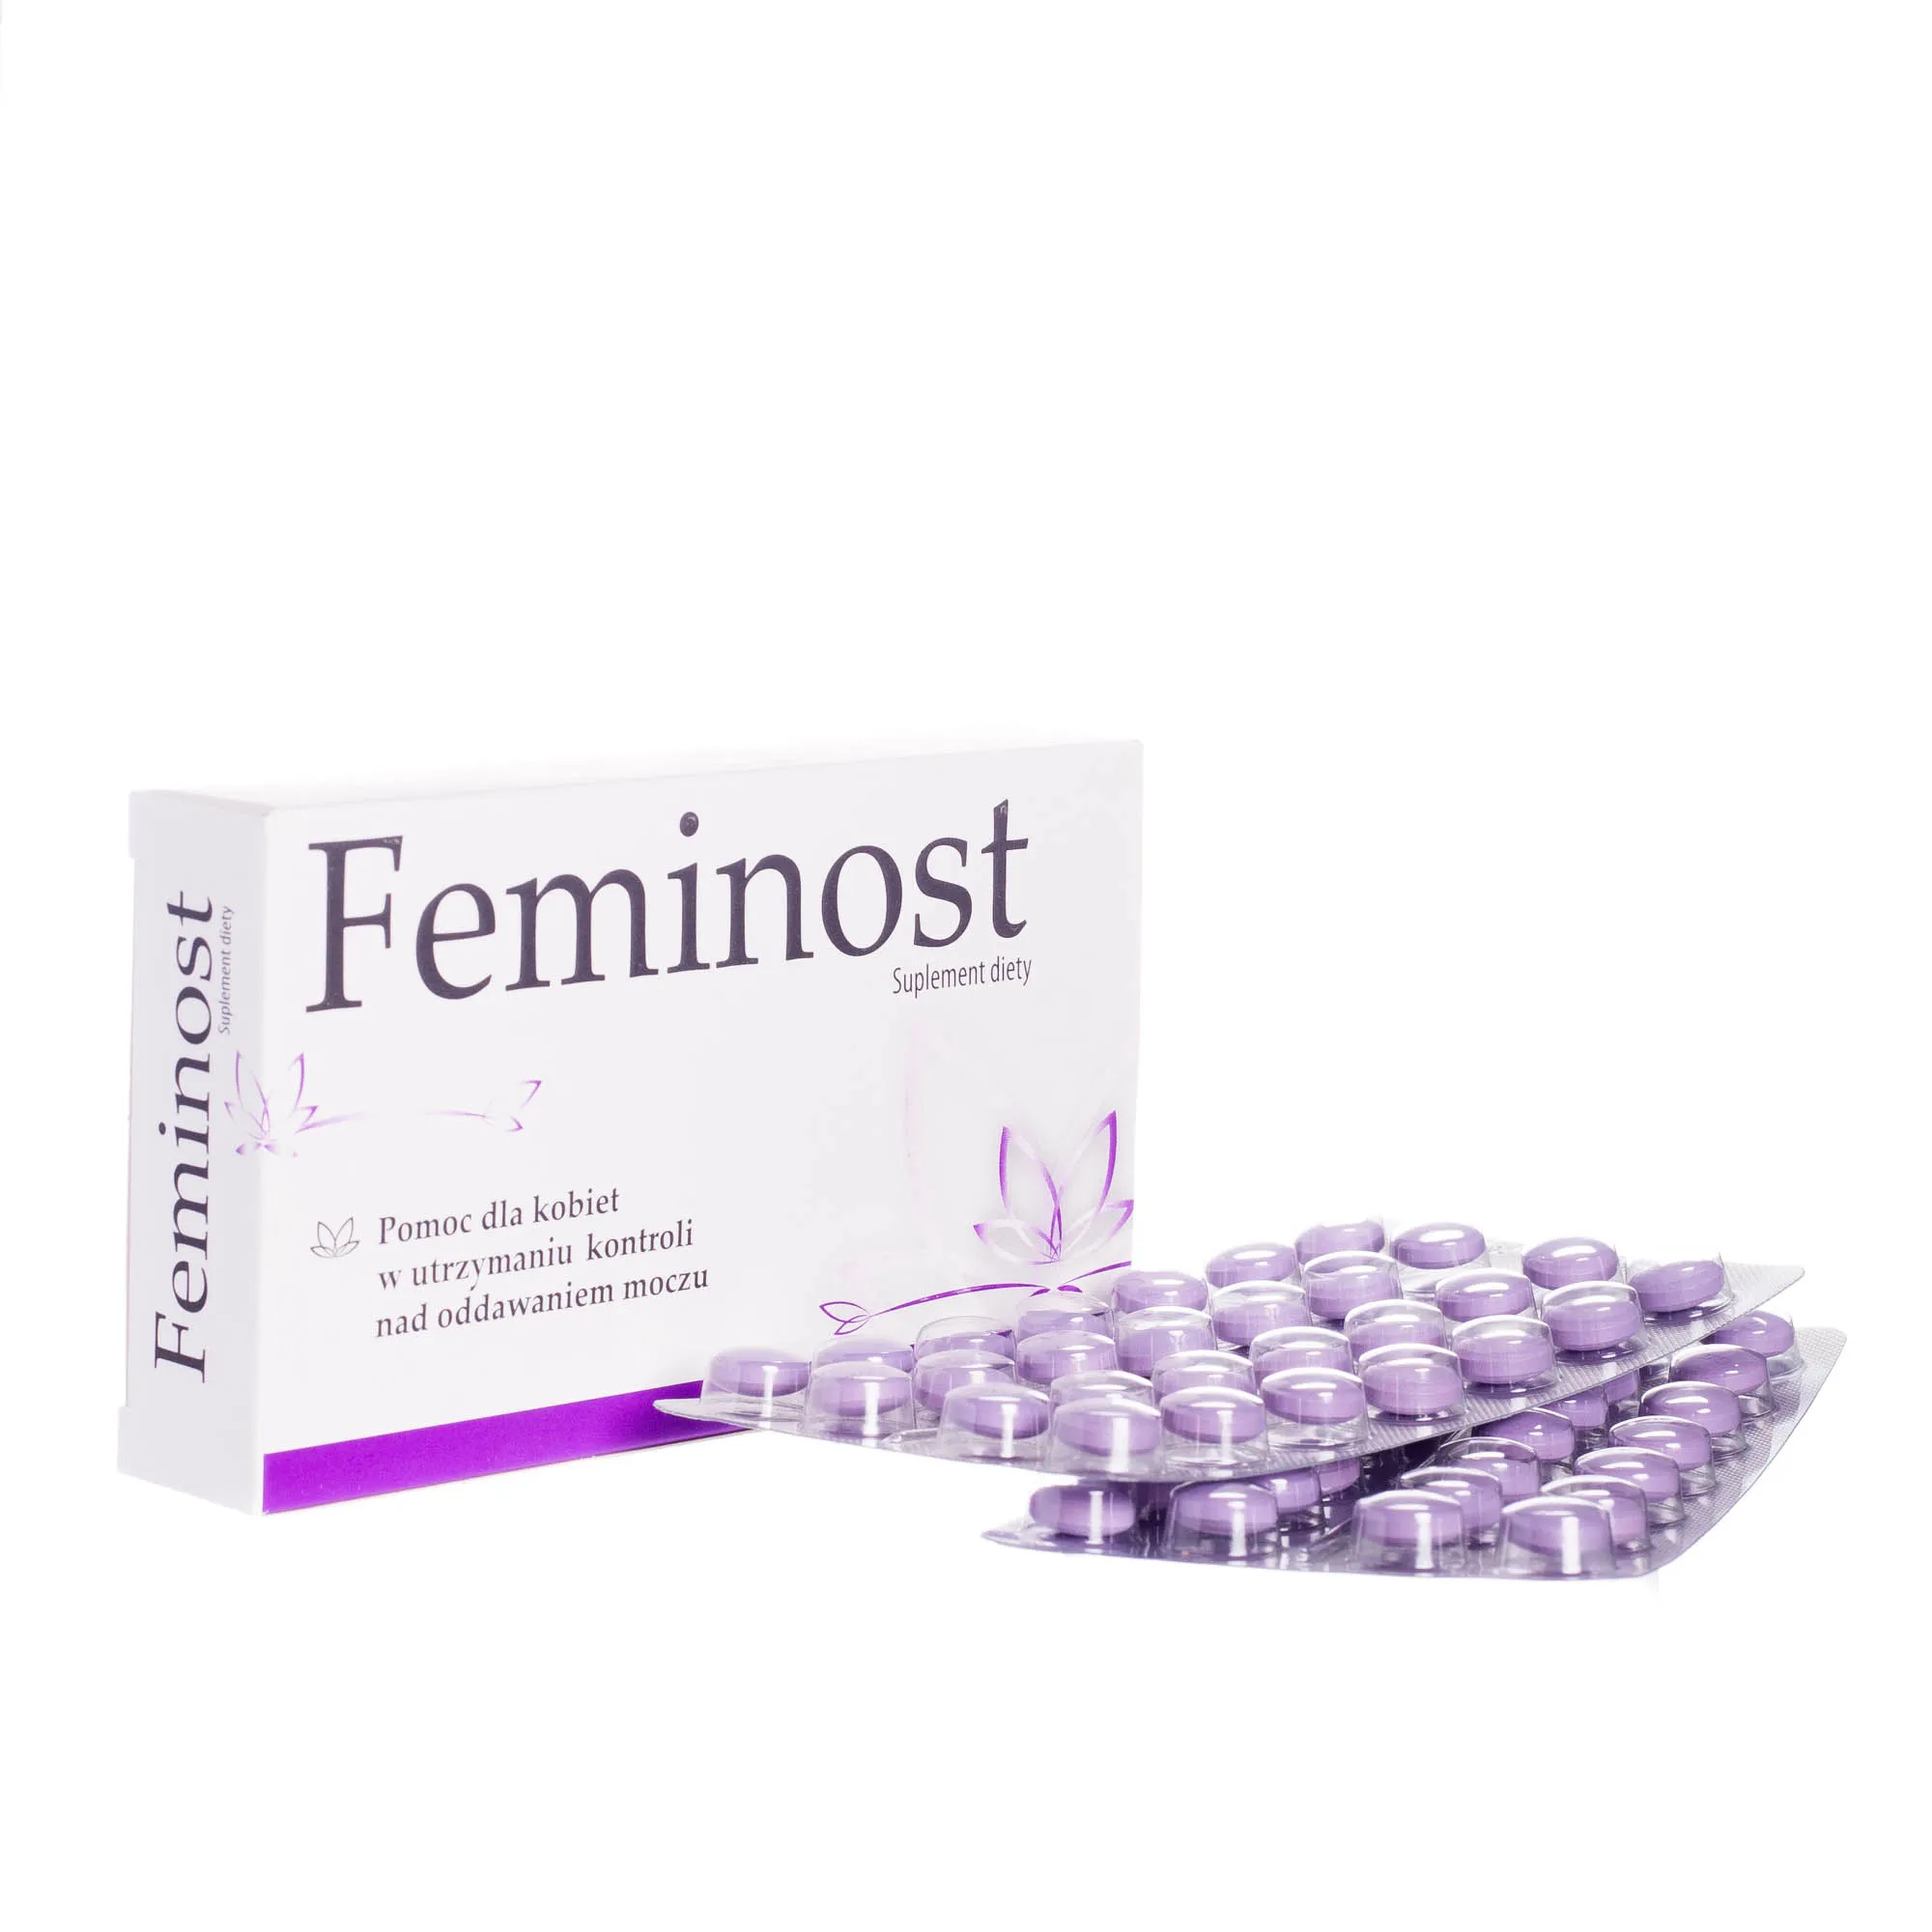 Feminost - suplement diety dla kobiet, 56 tabletek powlekanych 